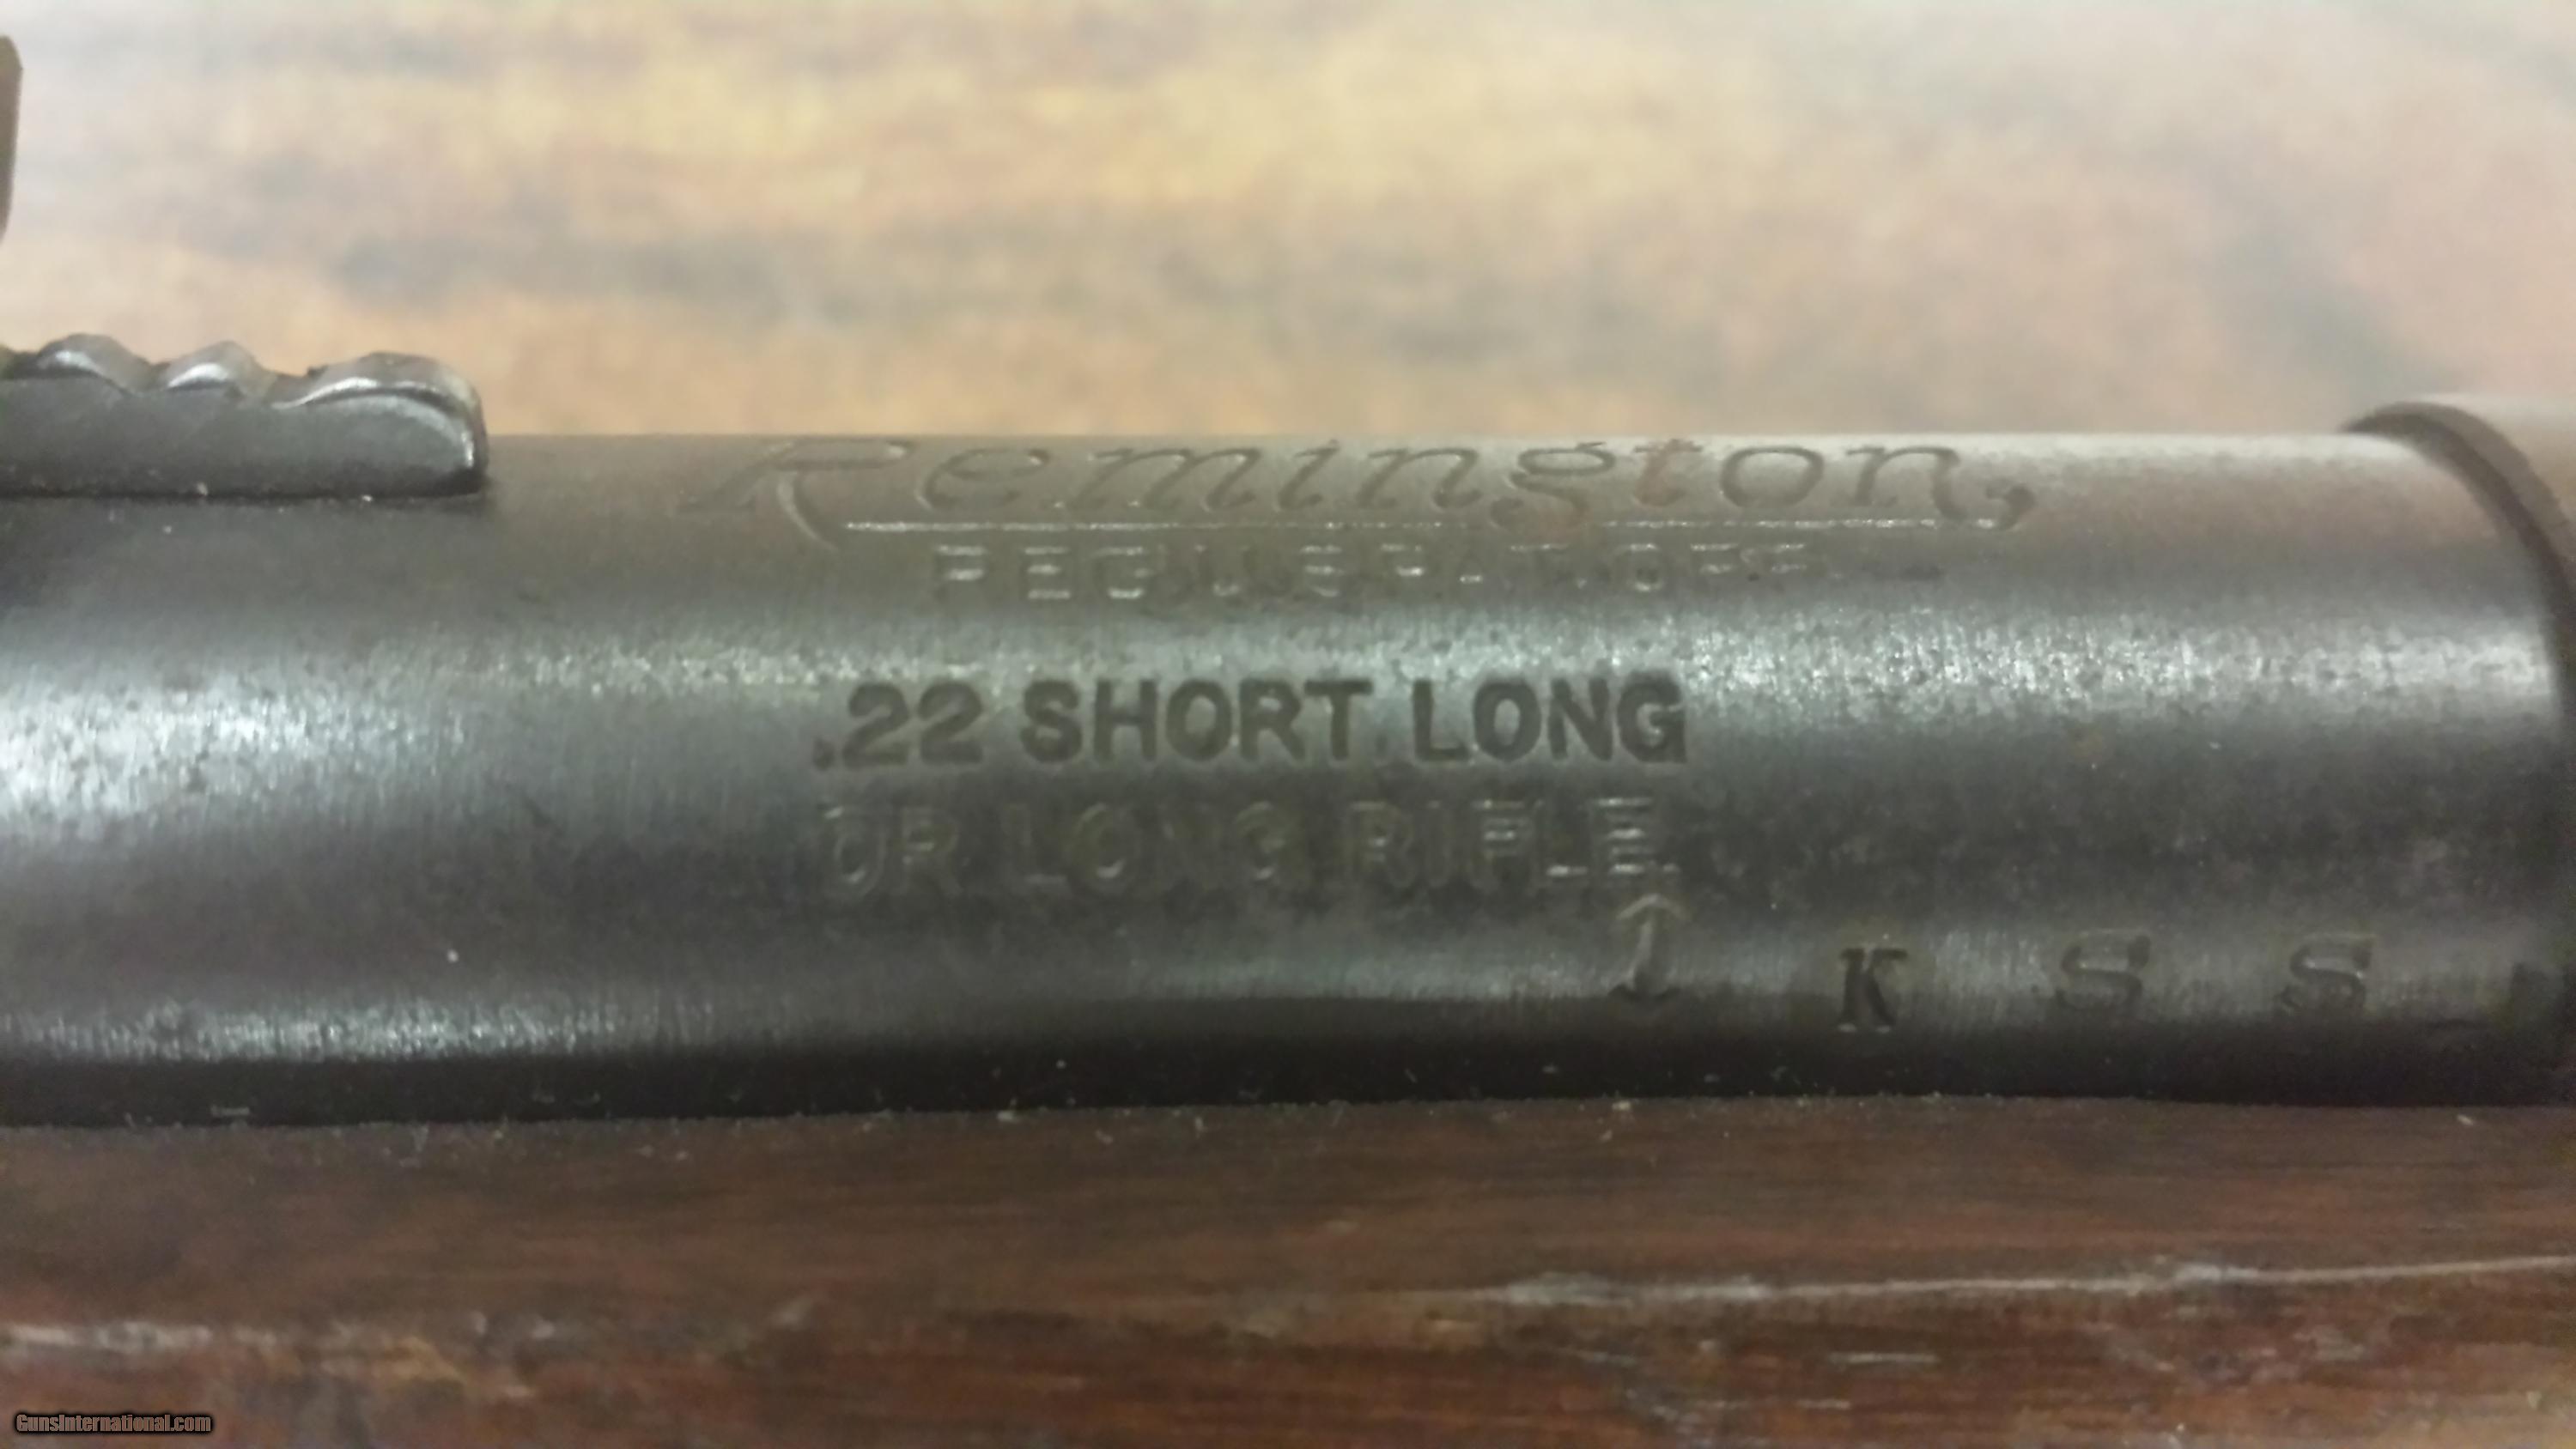 remington sportmaster 512 serial number